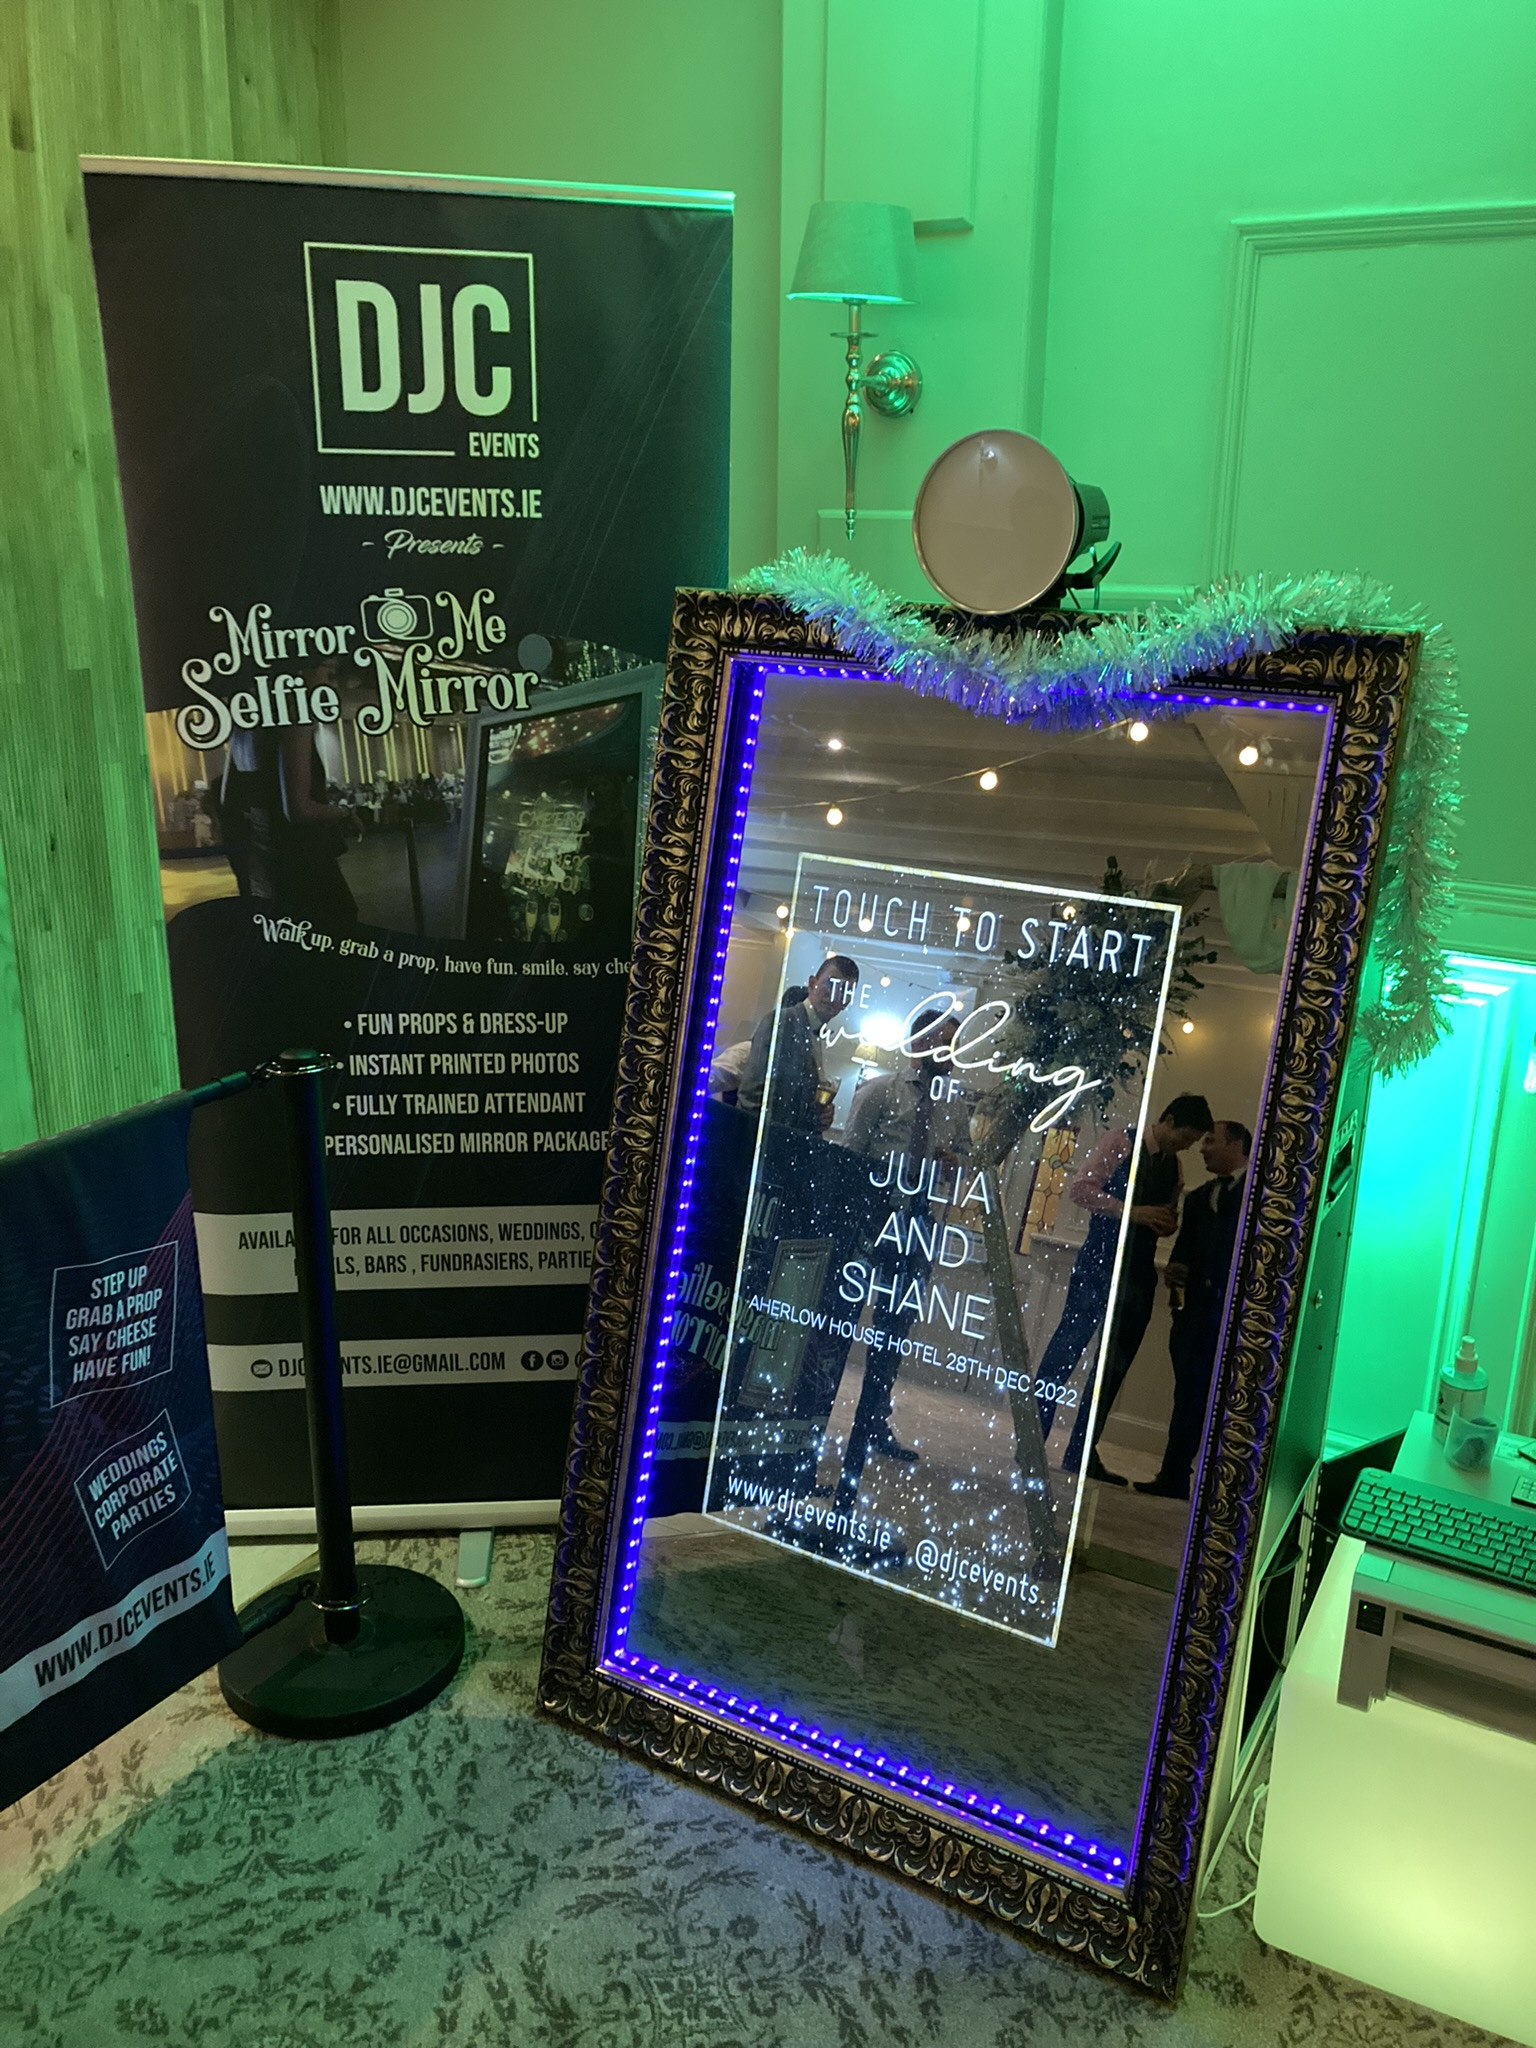 DJC Events Magic Selfie Mirror